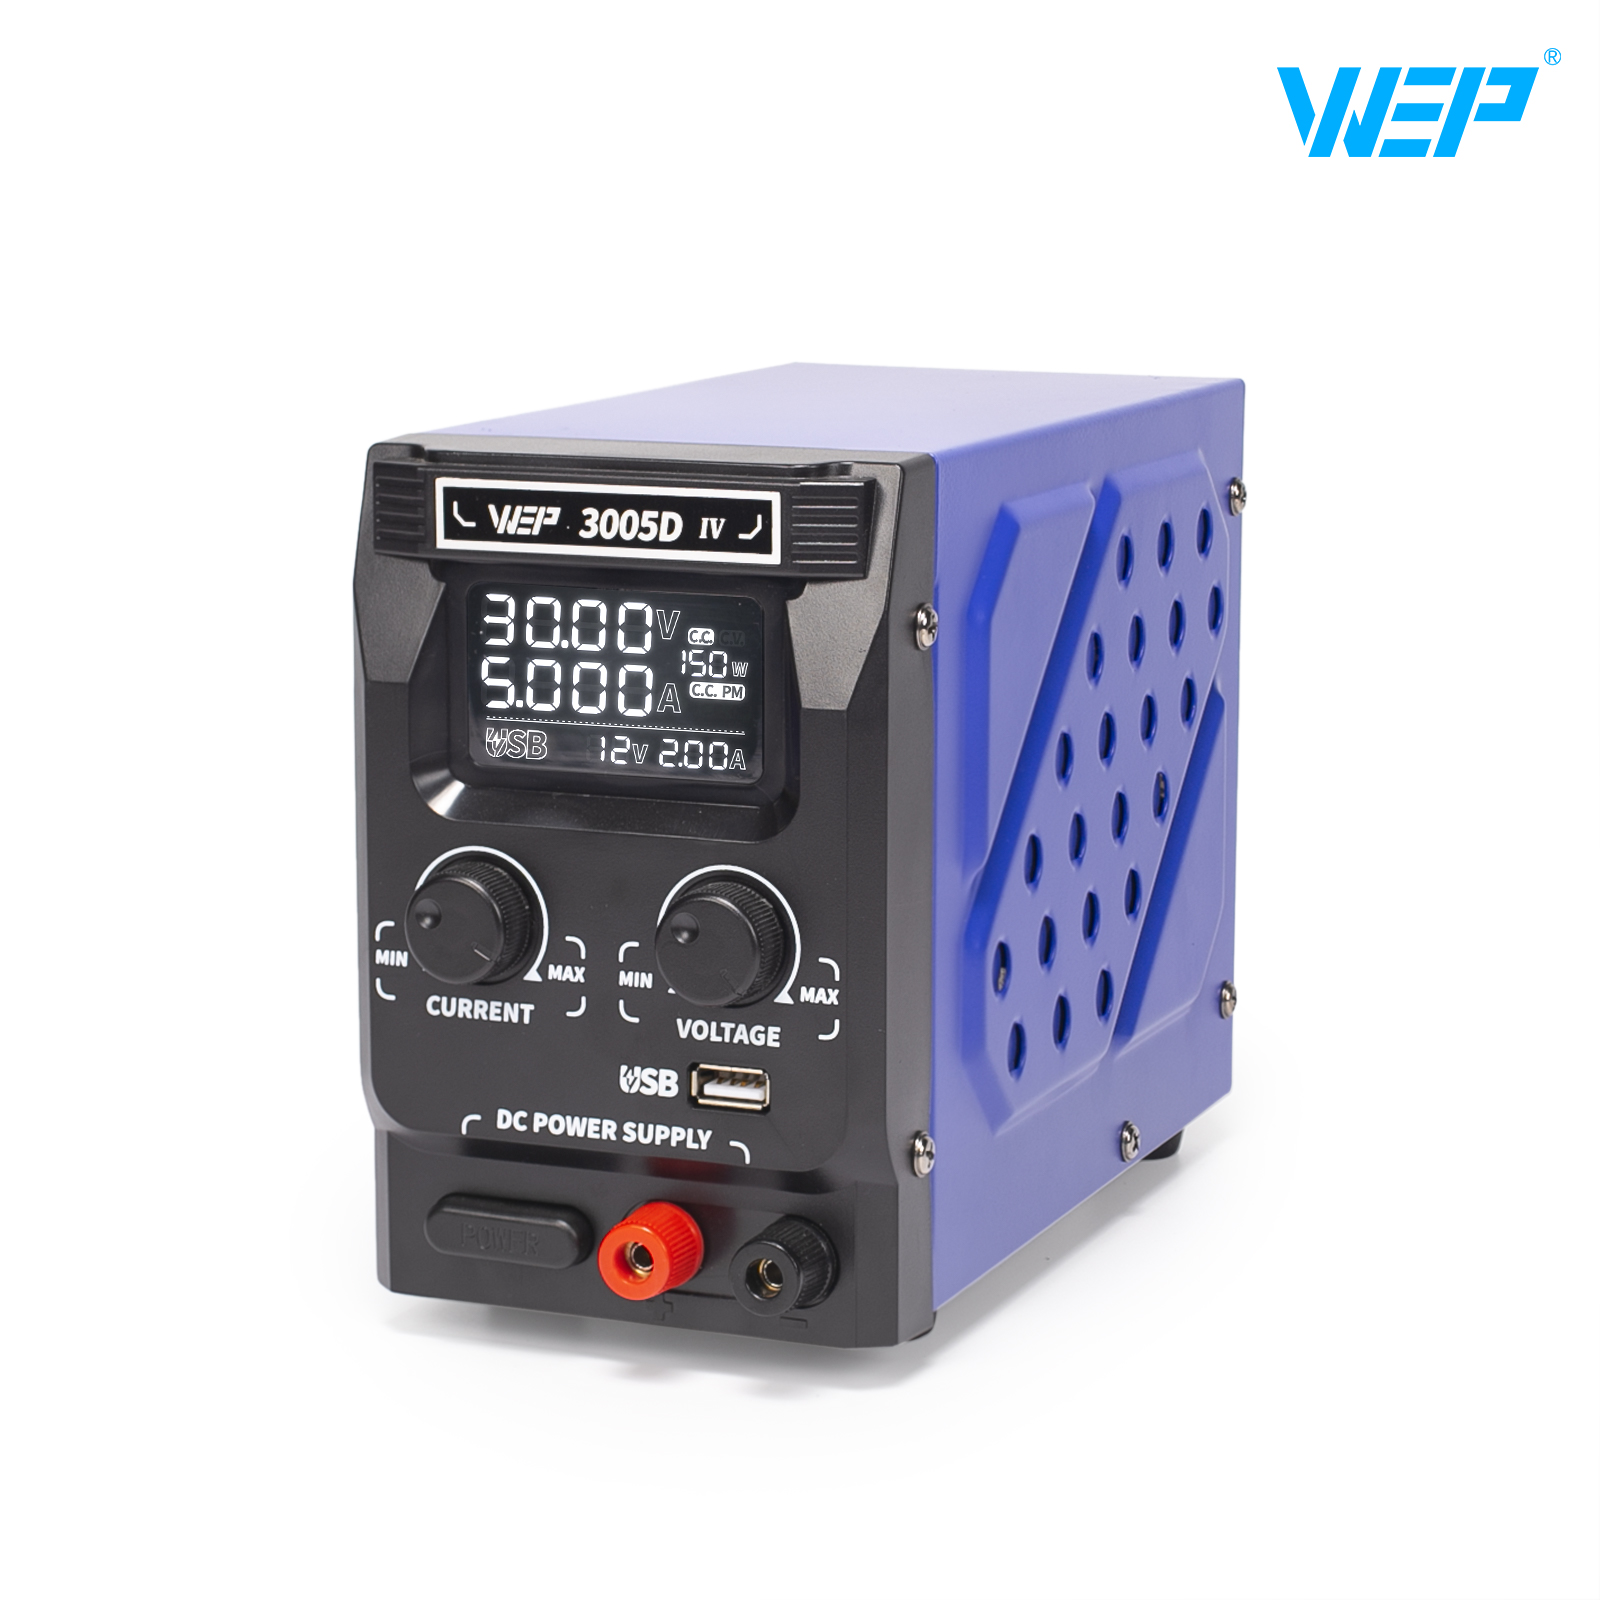 3005D IV DC Lab Power Supply